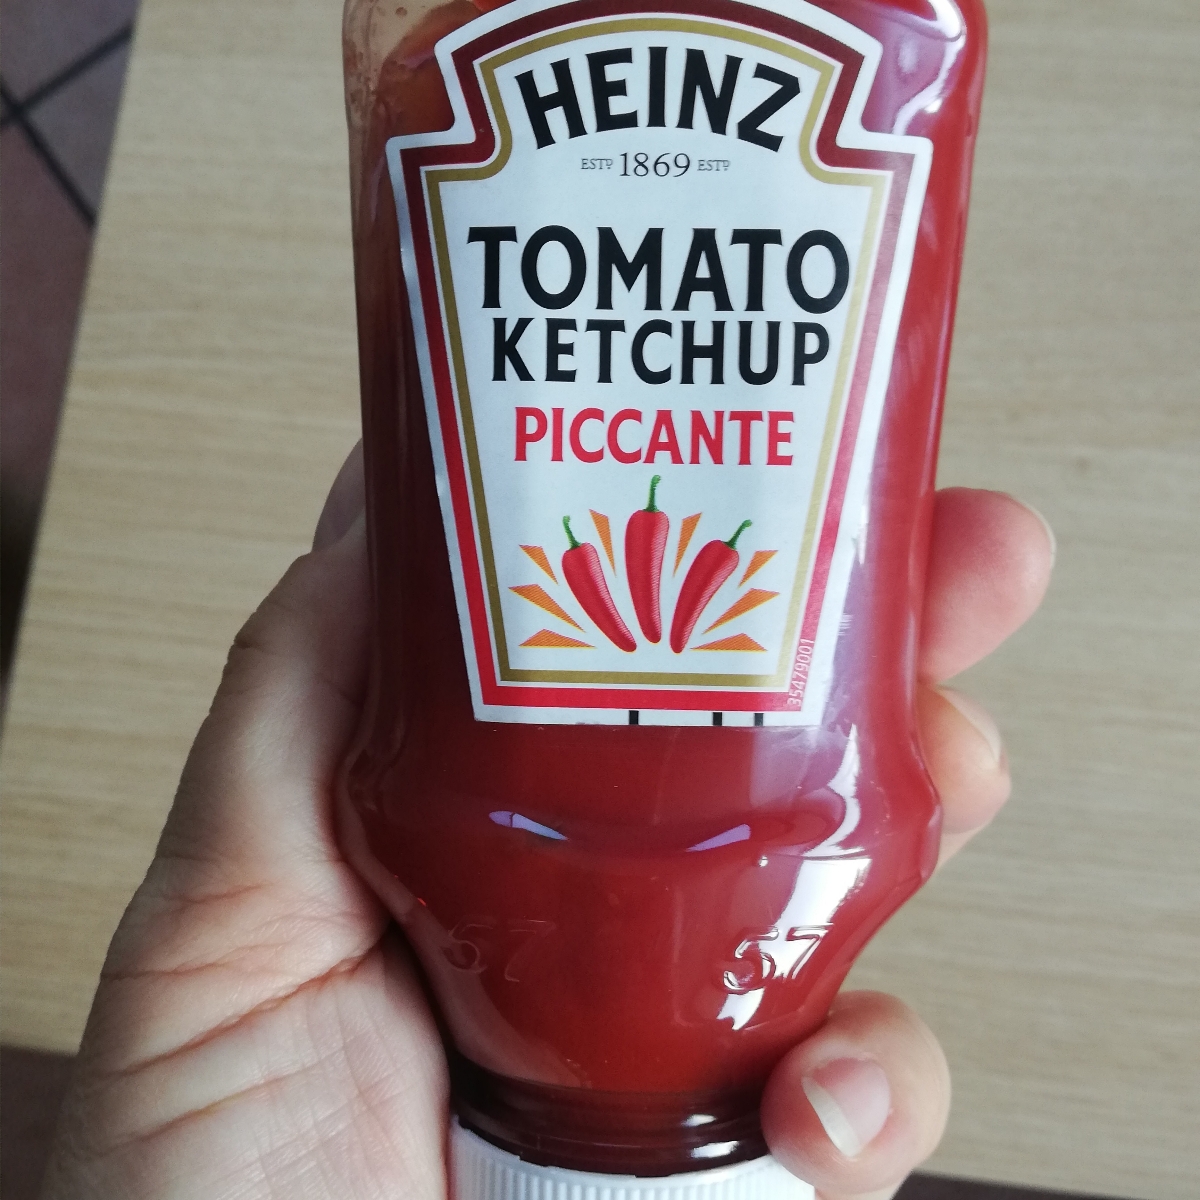 Heinz Tomato Ketchup Piccante Reviews | abillion